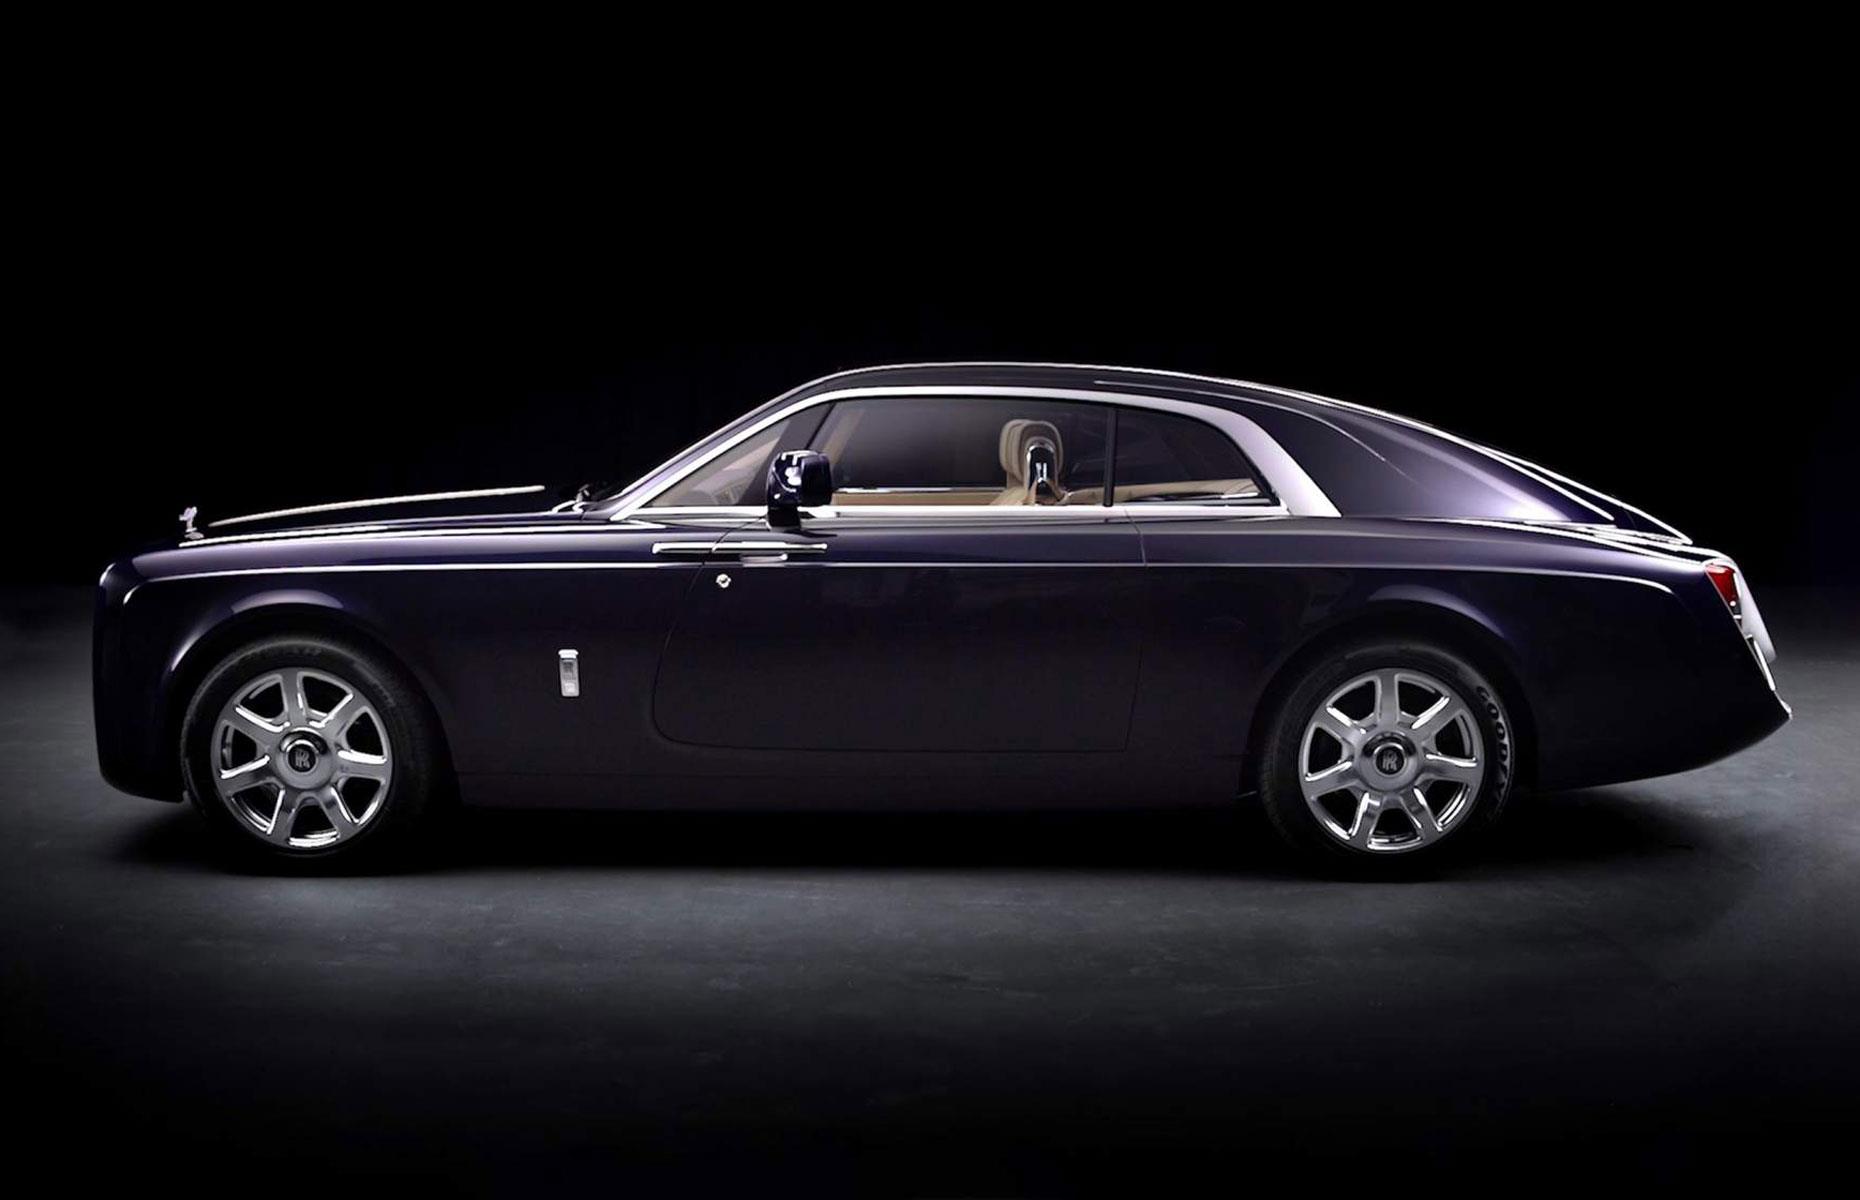 Automobiles: mystery billionaire's Rolls-Royce Sweptail